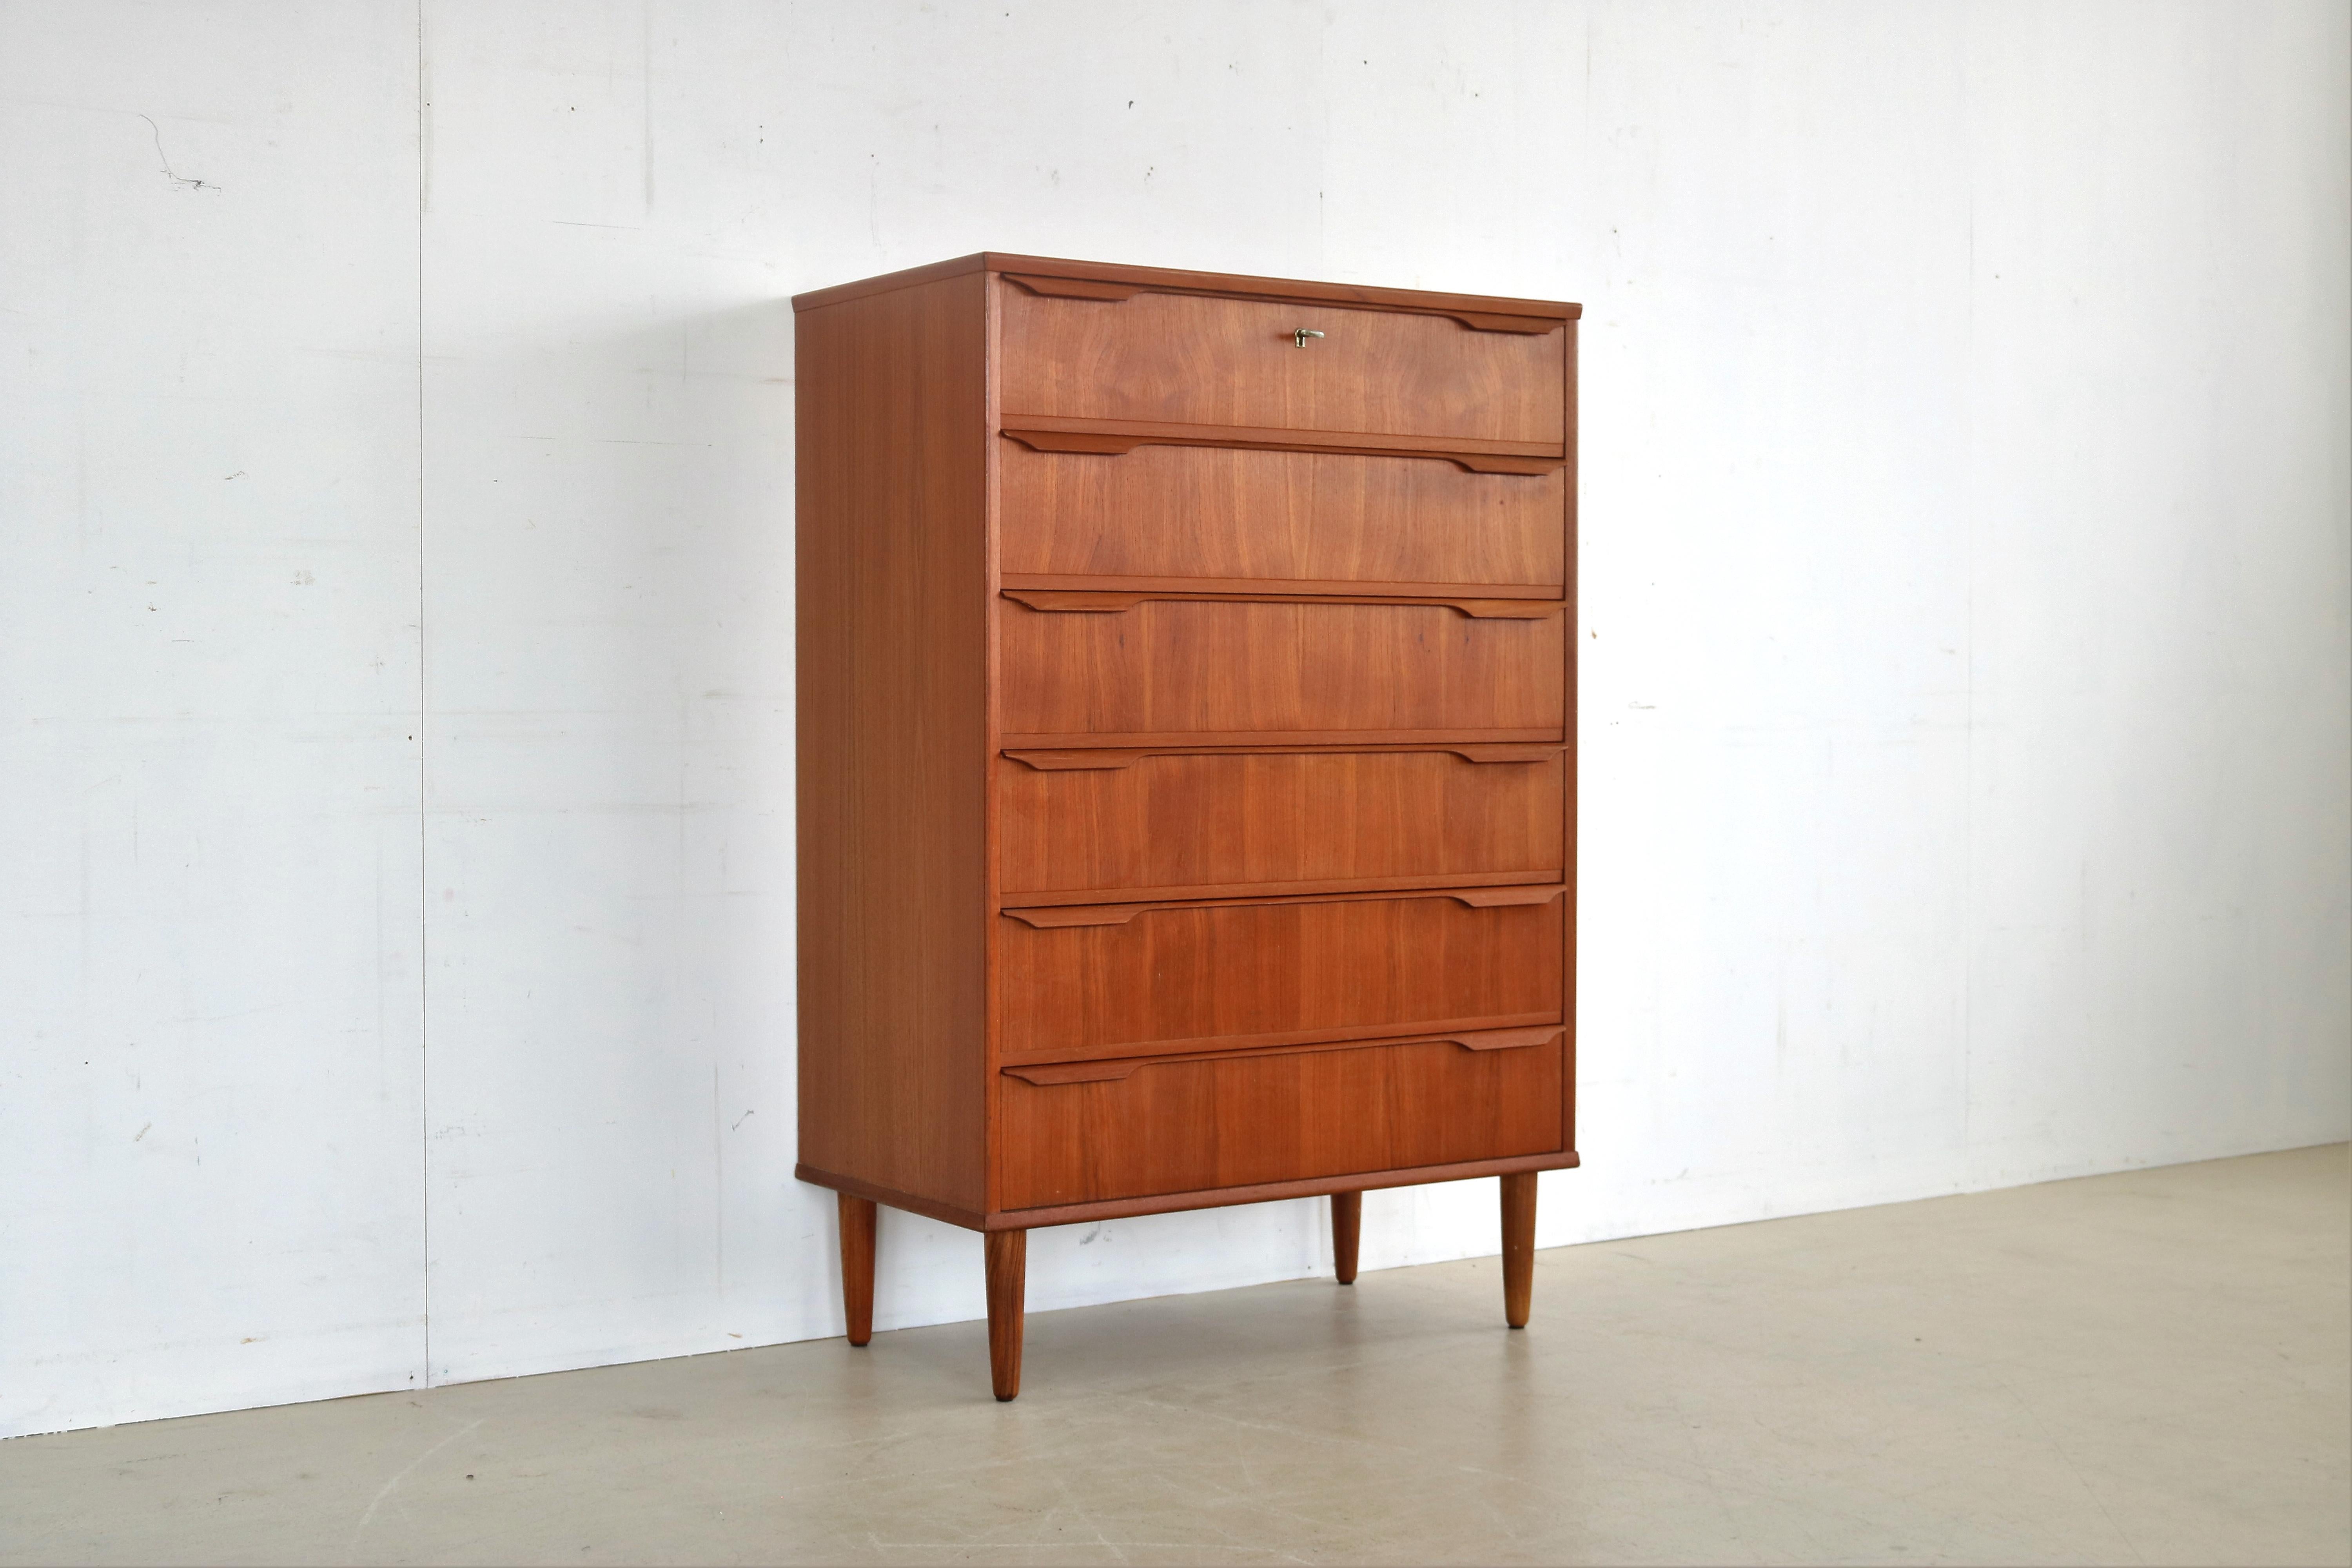 Mid-20th Century Vintage Teak Chest of Drawers Cabinet 60s Danish